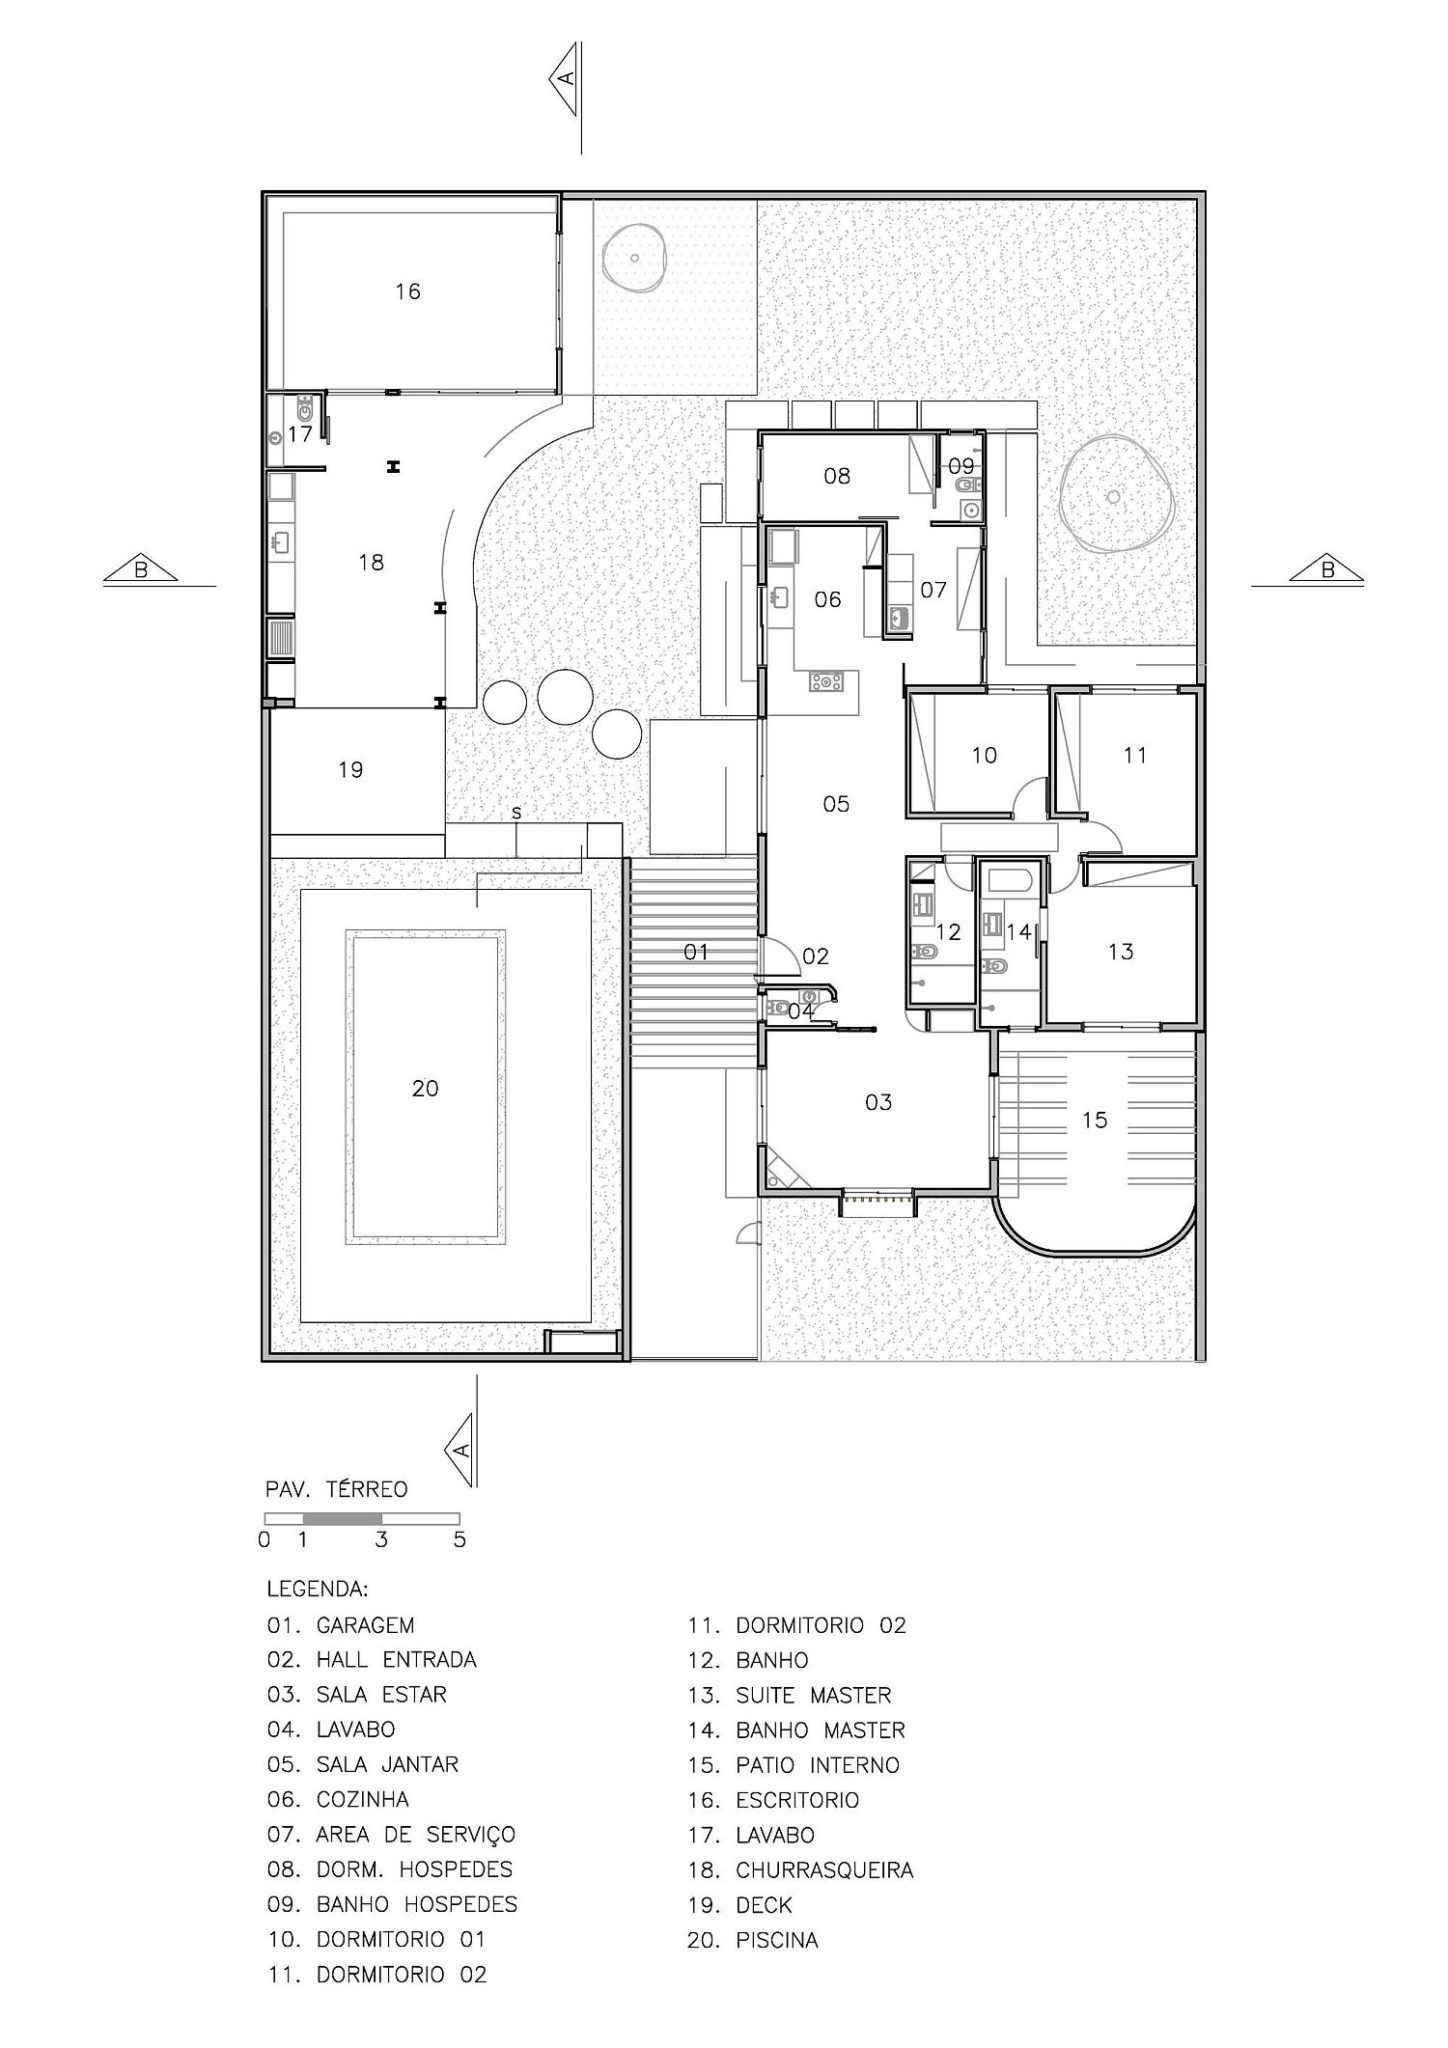 Floor plan of Barão Geraldo Residence